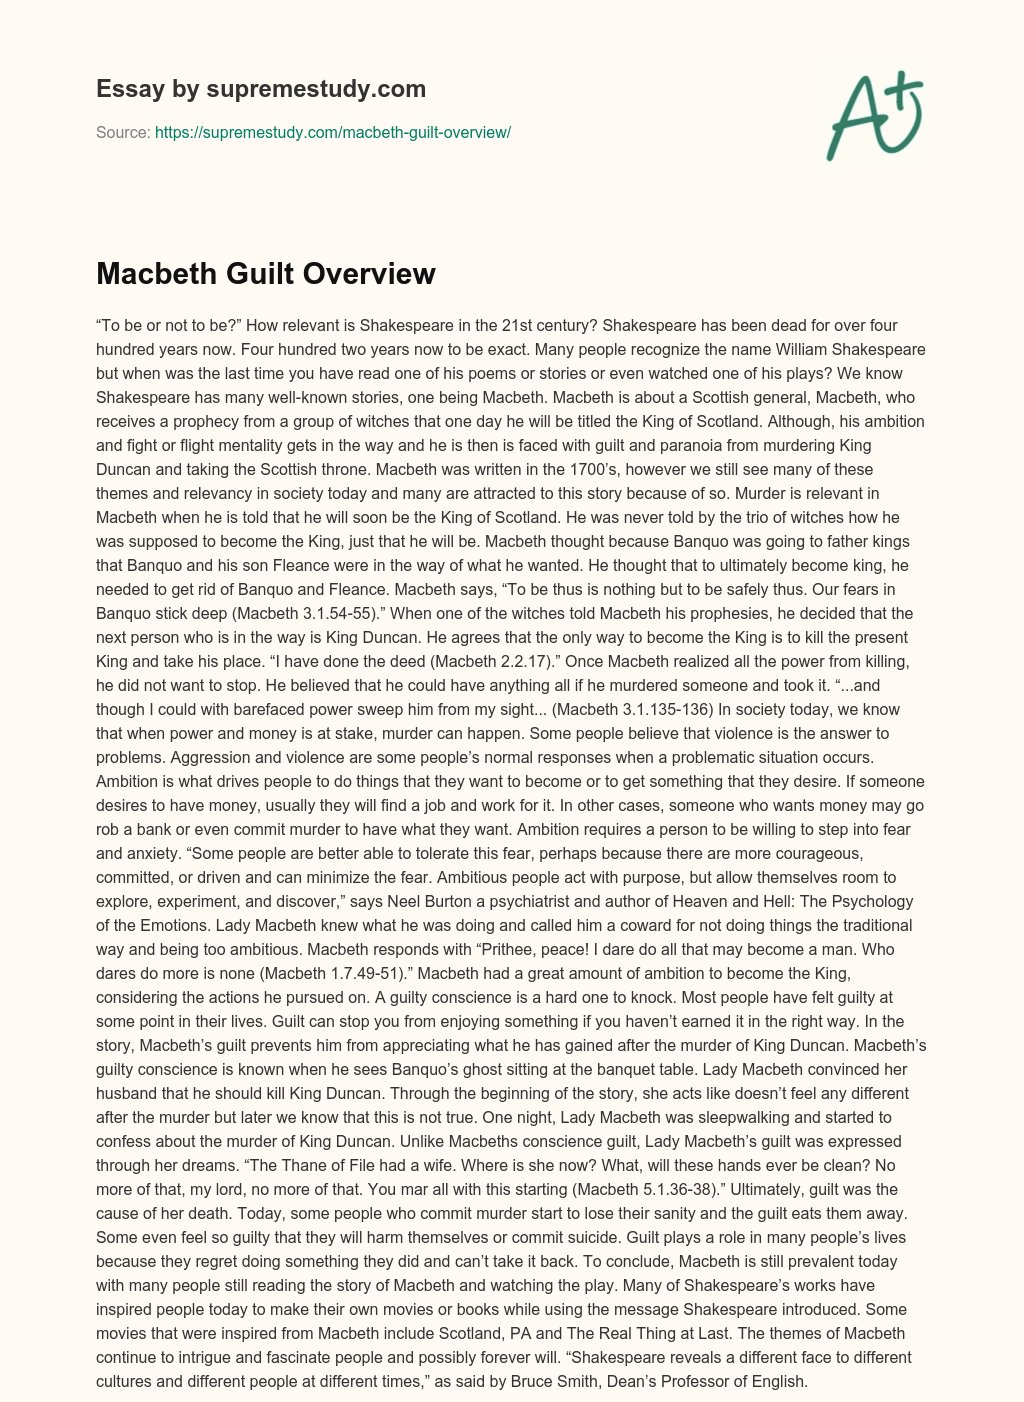 macbeth essay question on guilt